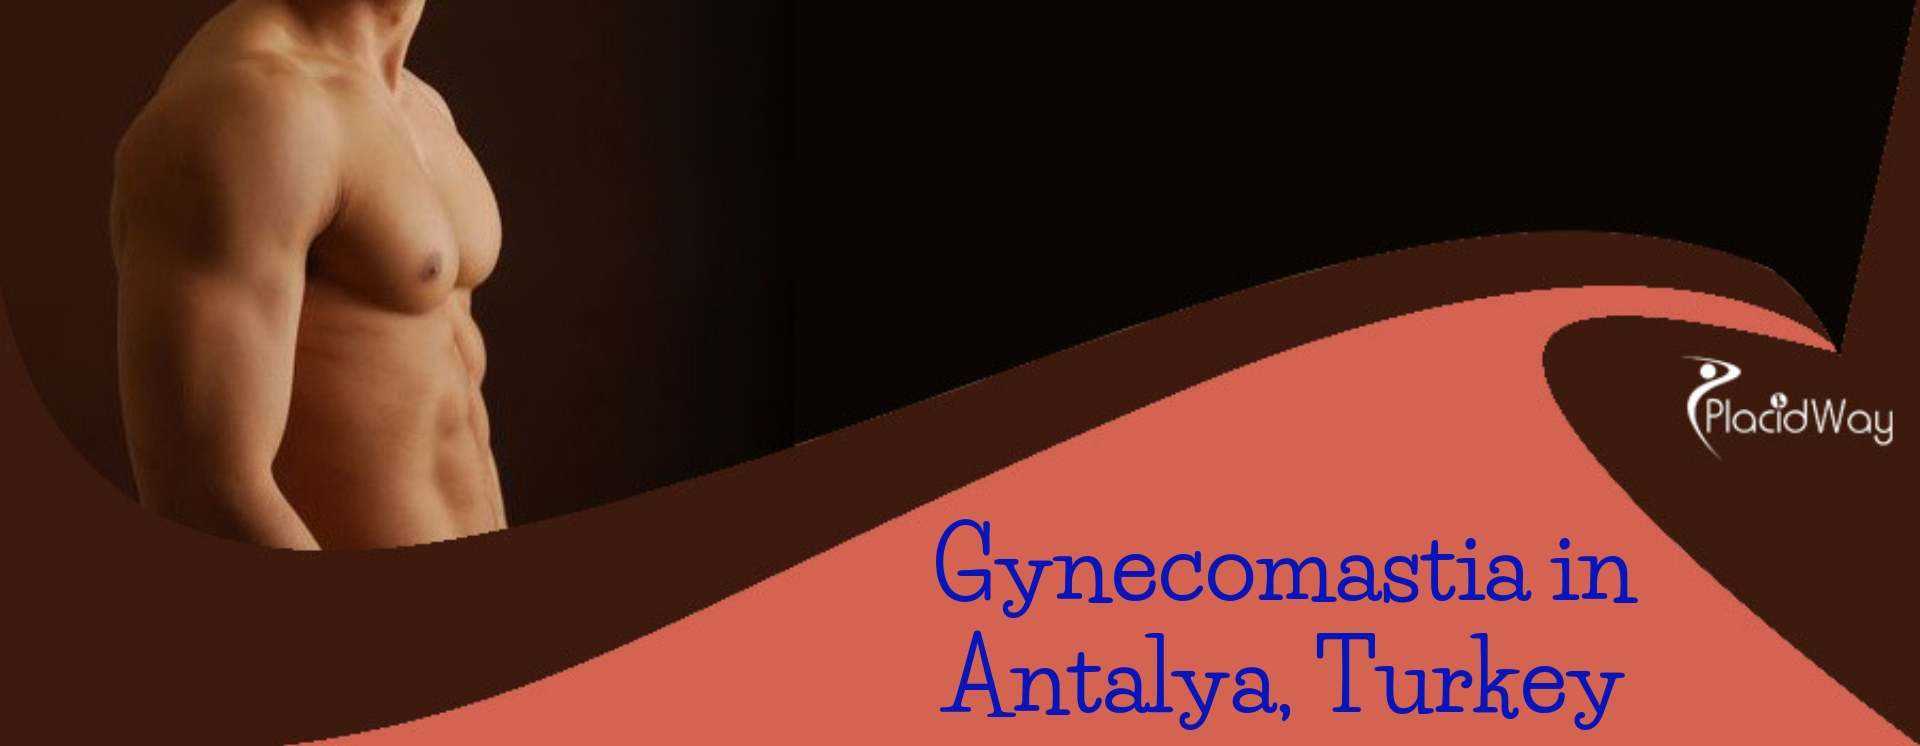 Gynecomastia in Antalya, Turkey